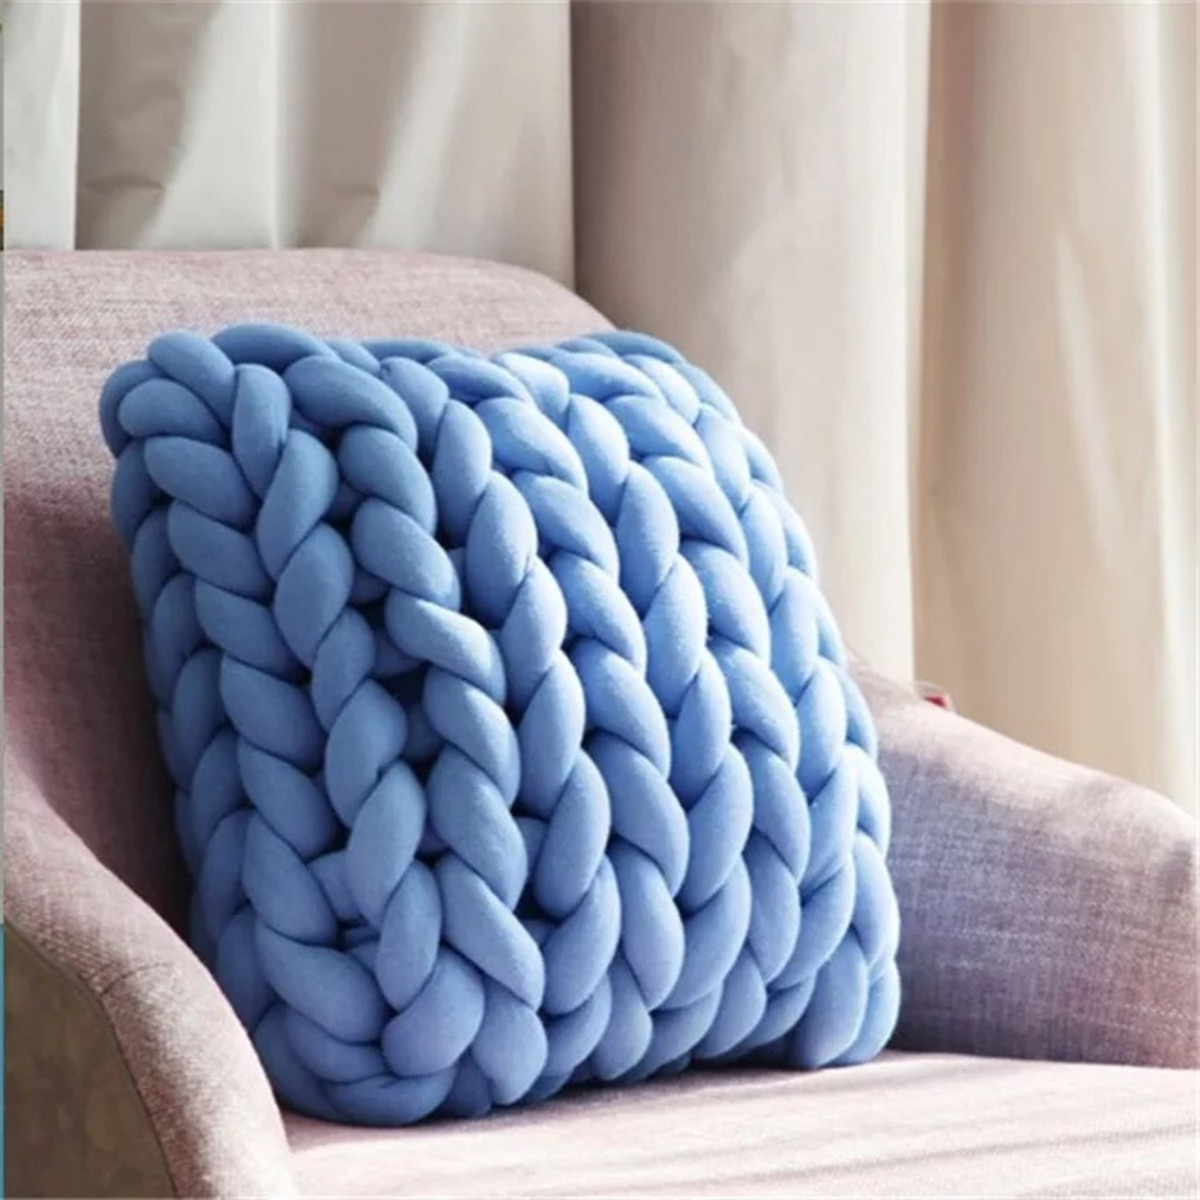 Zituop Super Soft Chunky Yarn Bulky Roving for Arm Knitting Blanket,  500g-1.1lb (Light Blue)